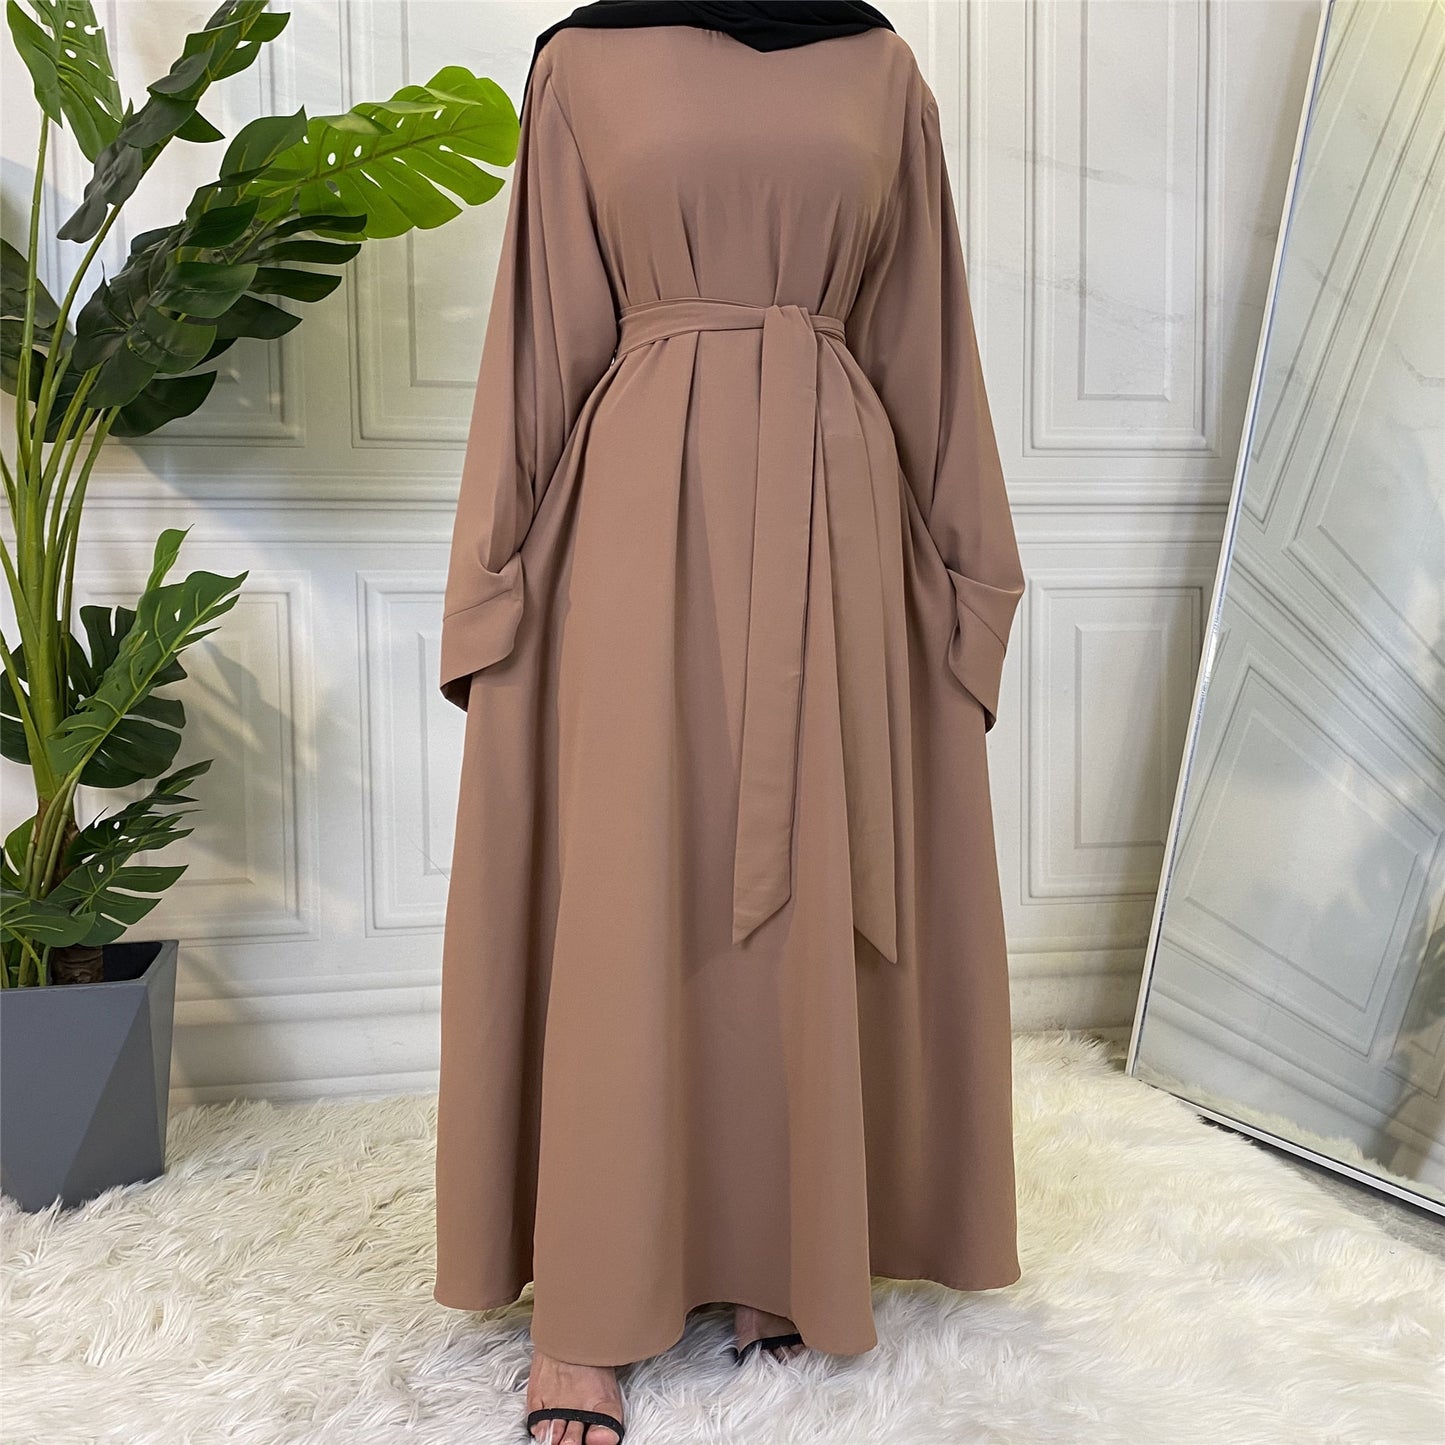 Muslim Fashion Hijab Long Dresses Women With Sashes Islamic Clothing